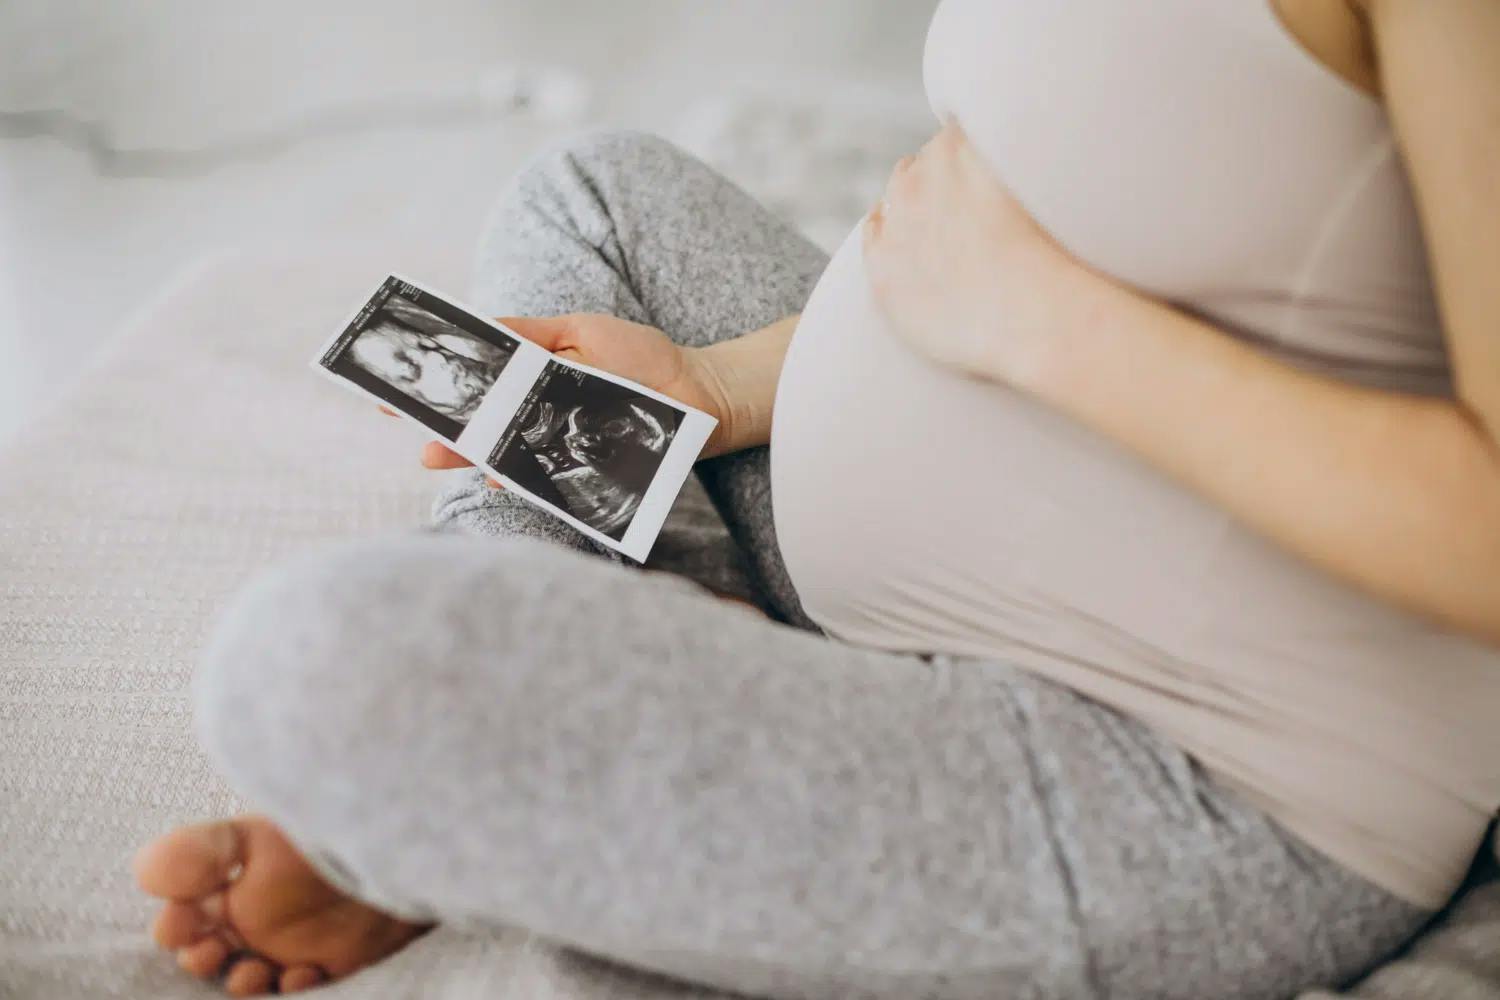 Aborto espontâneo dá direito ao salário-maternidade?